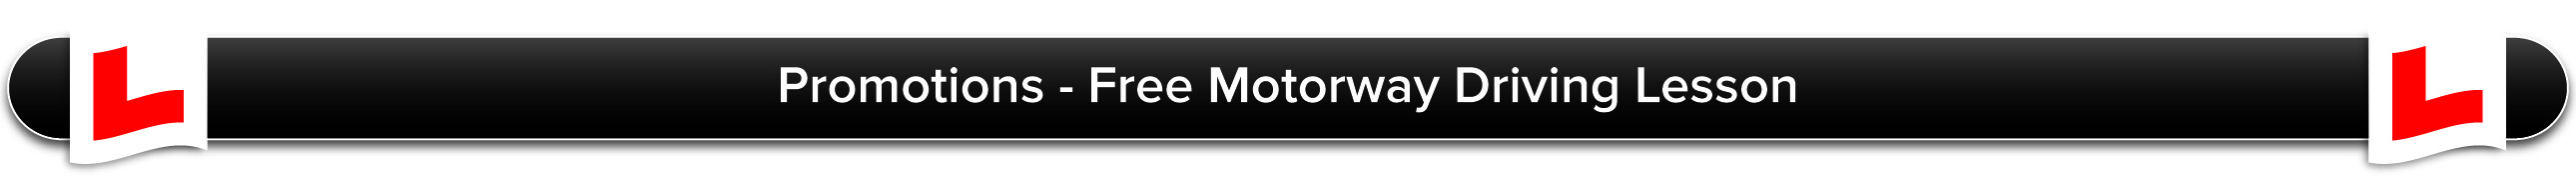 Motorway Promotions